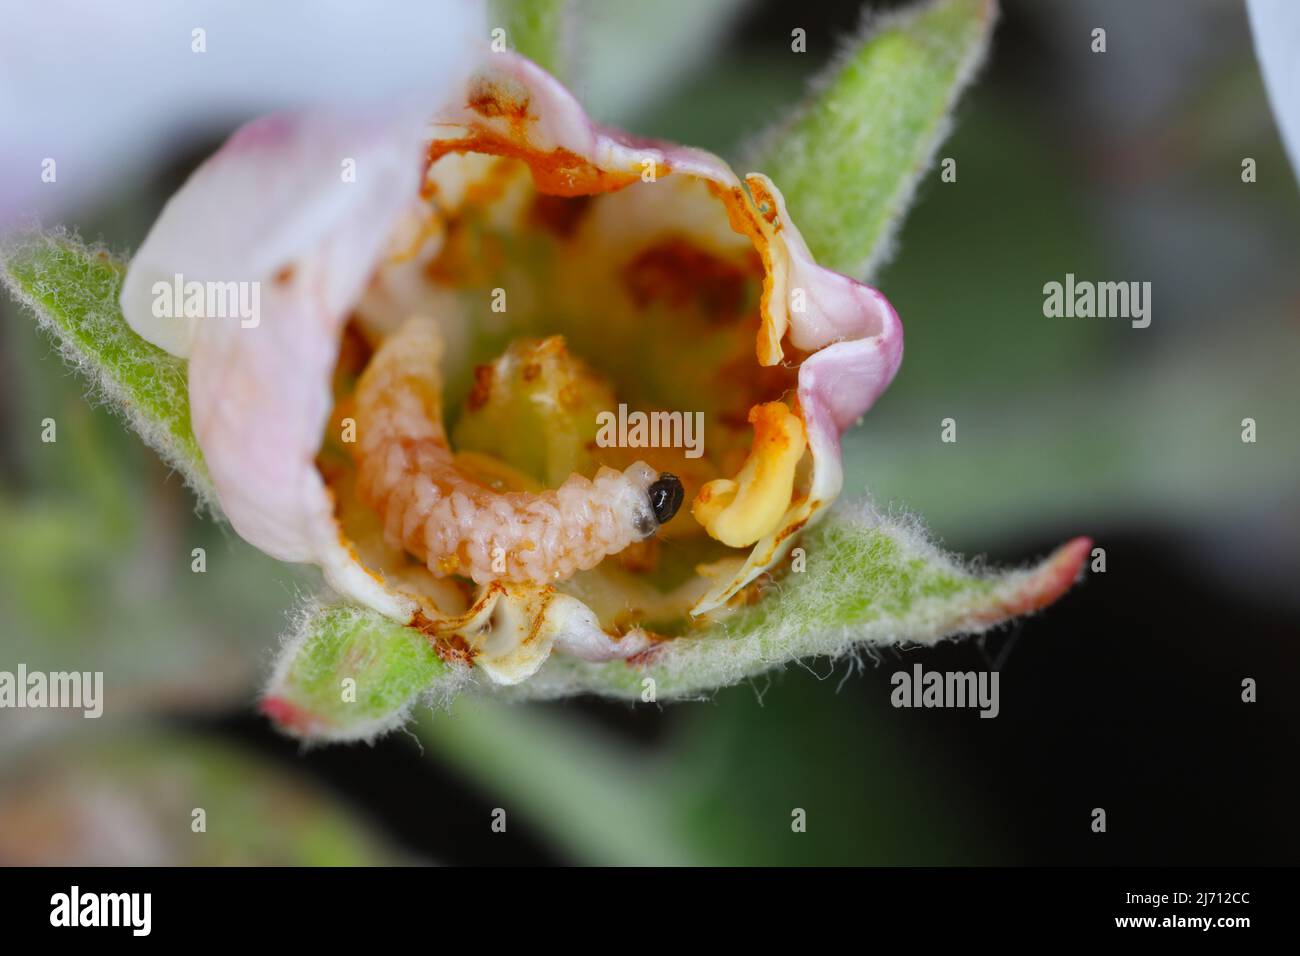 Anthonomus pomorum or the apple blossom weevil is a major pests of apple trees Malus domestica. larva inside apple tree bud. Stock Photo